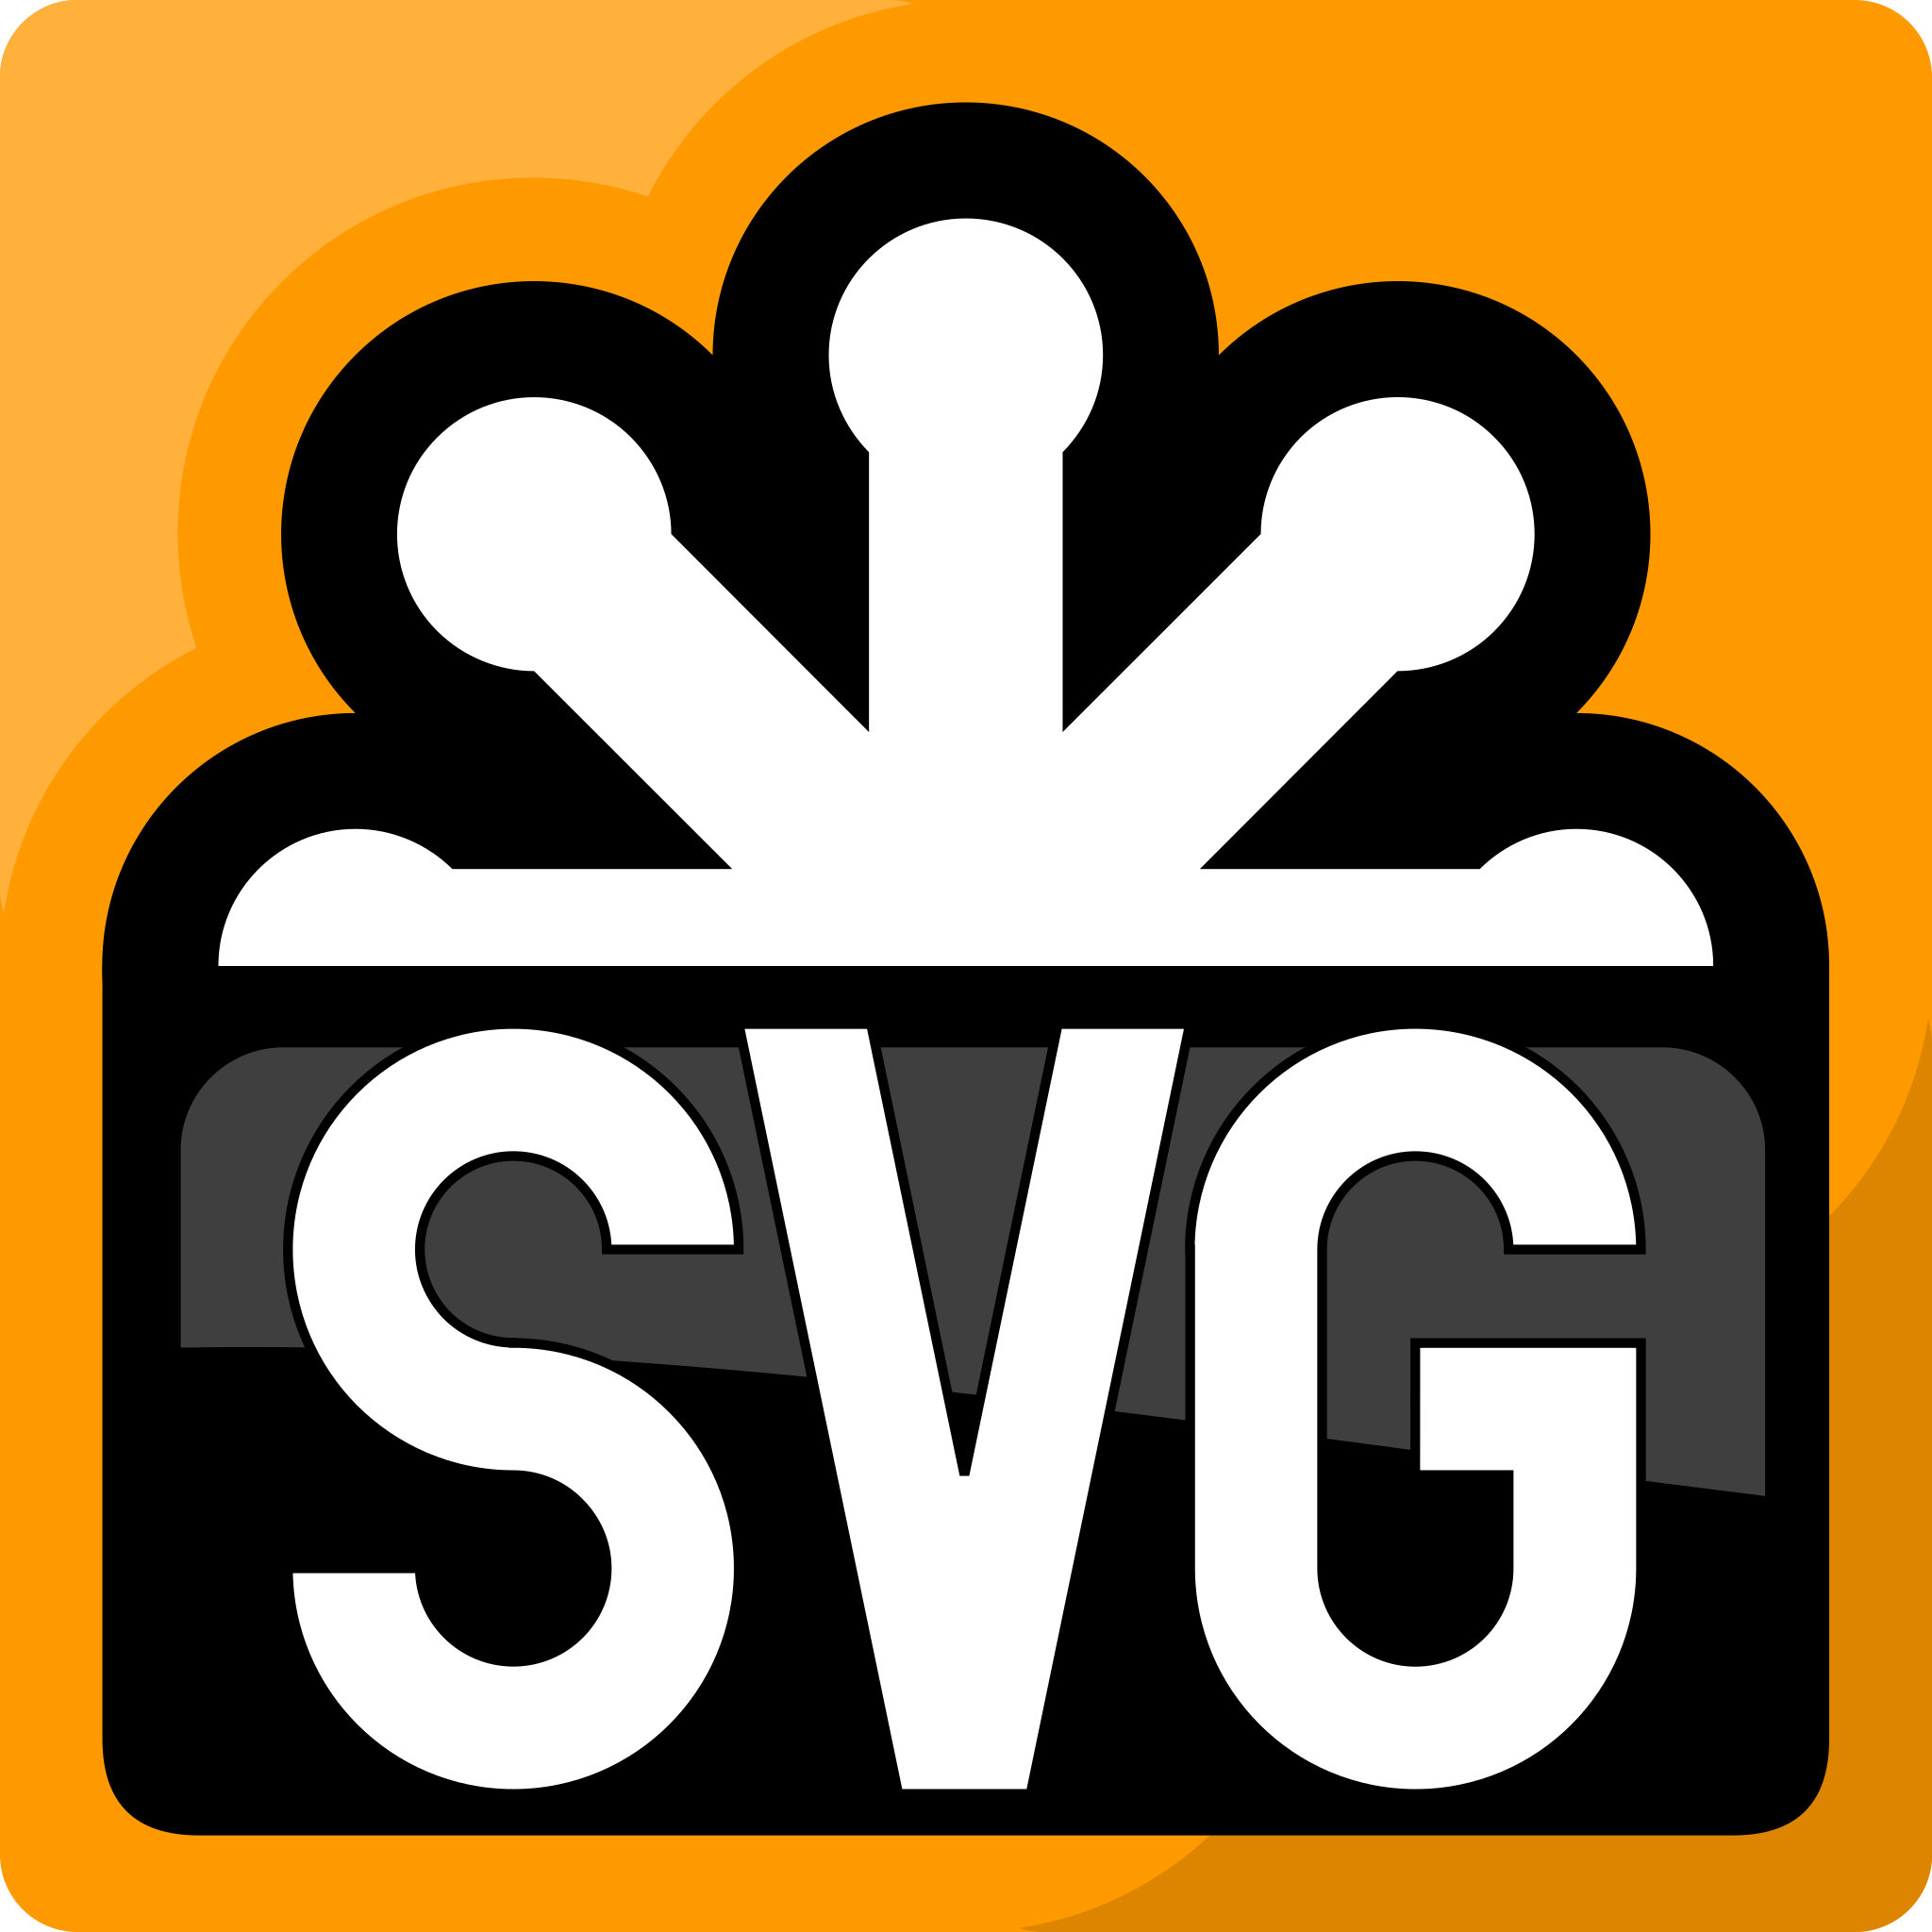 File:GoPro logo.svg - Wikimedia Commons